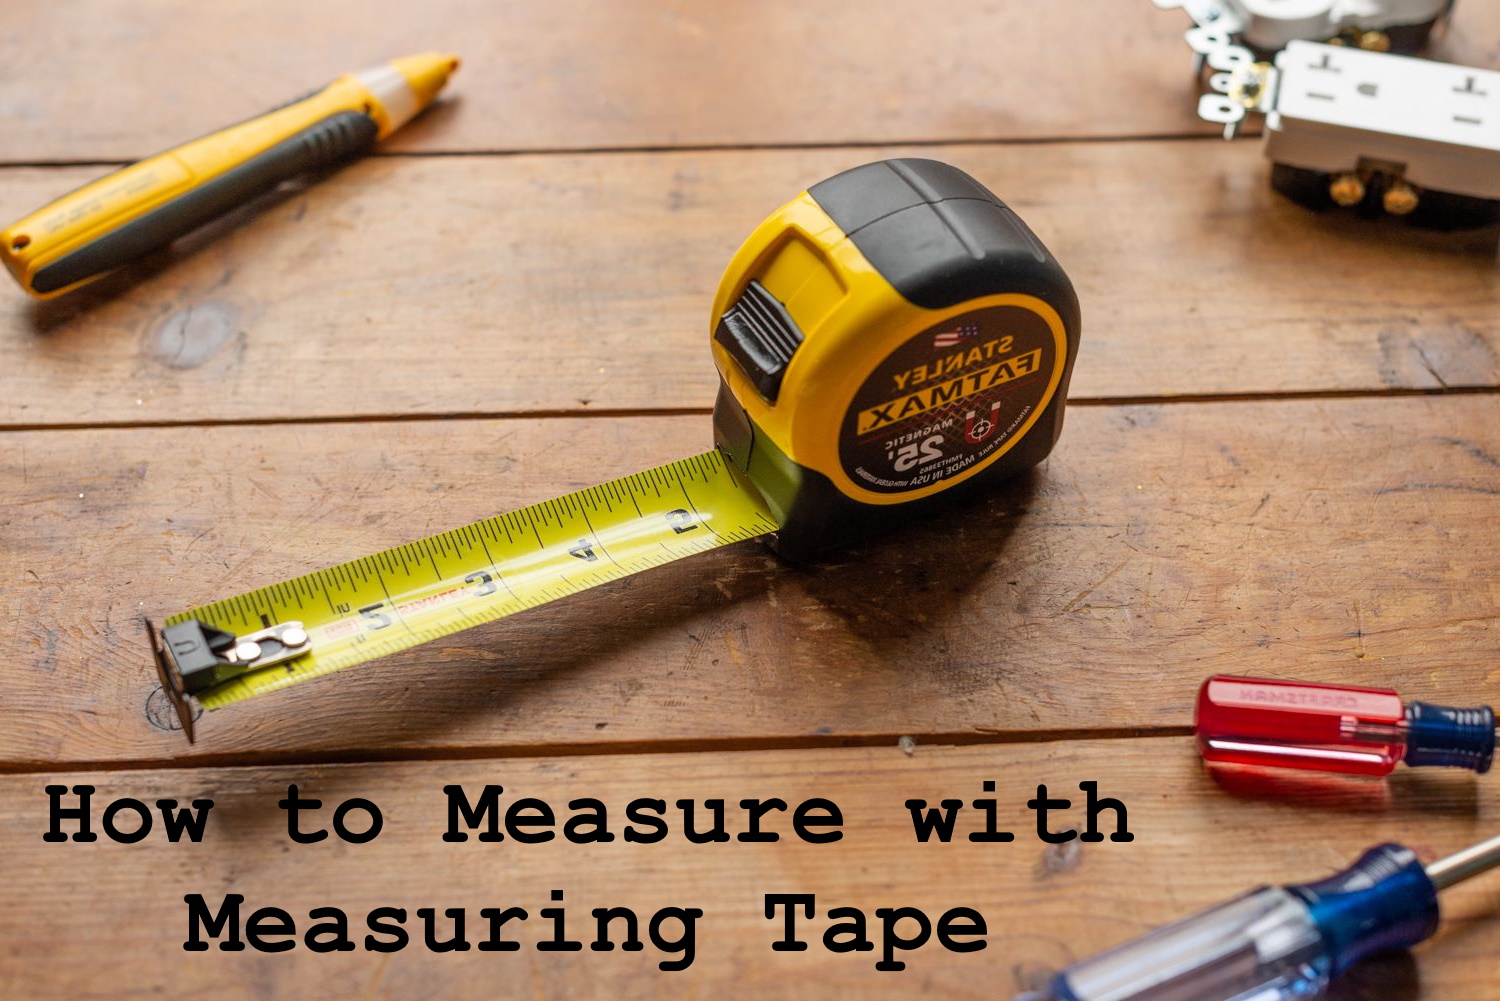 Tape Measures at